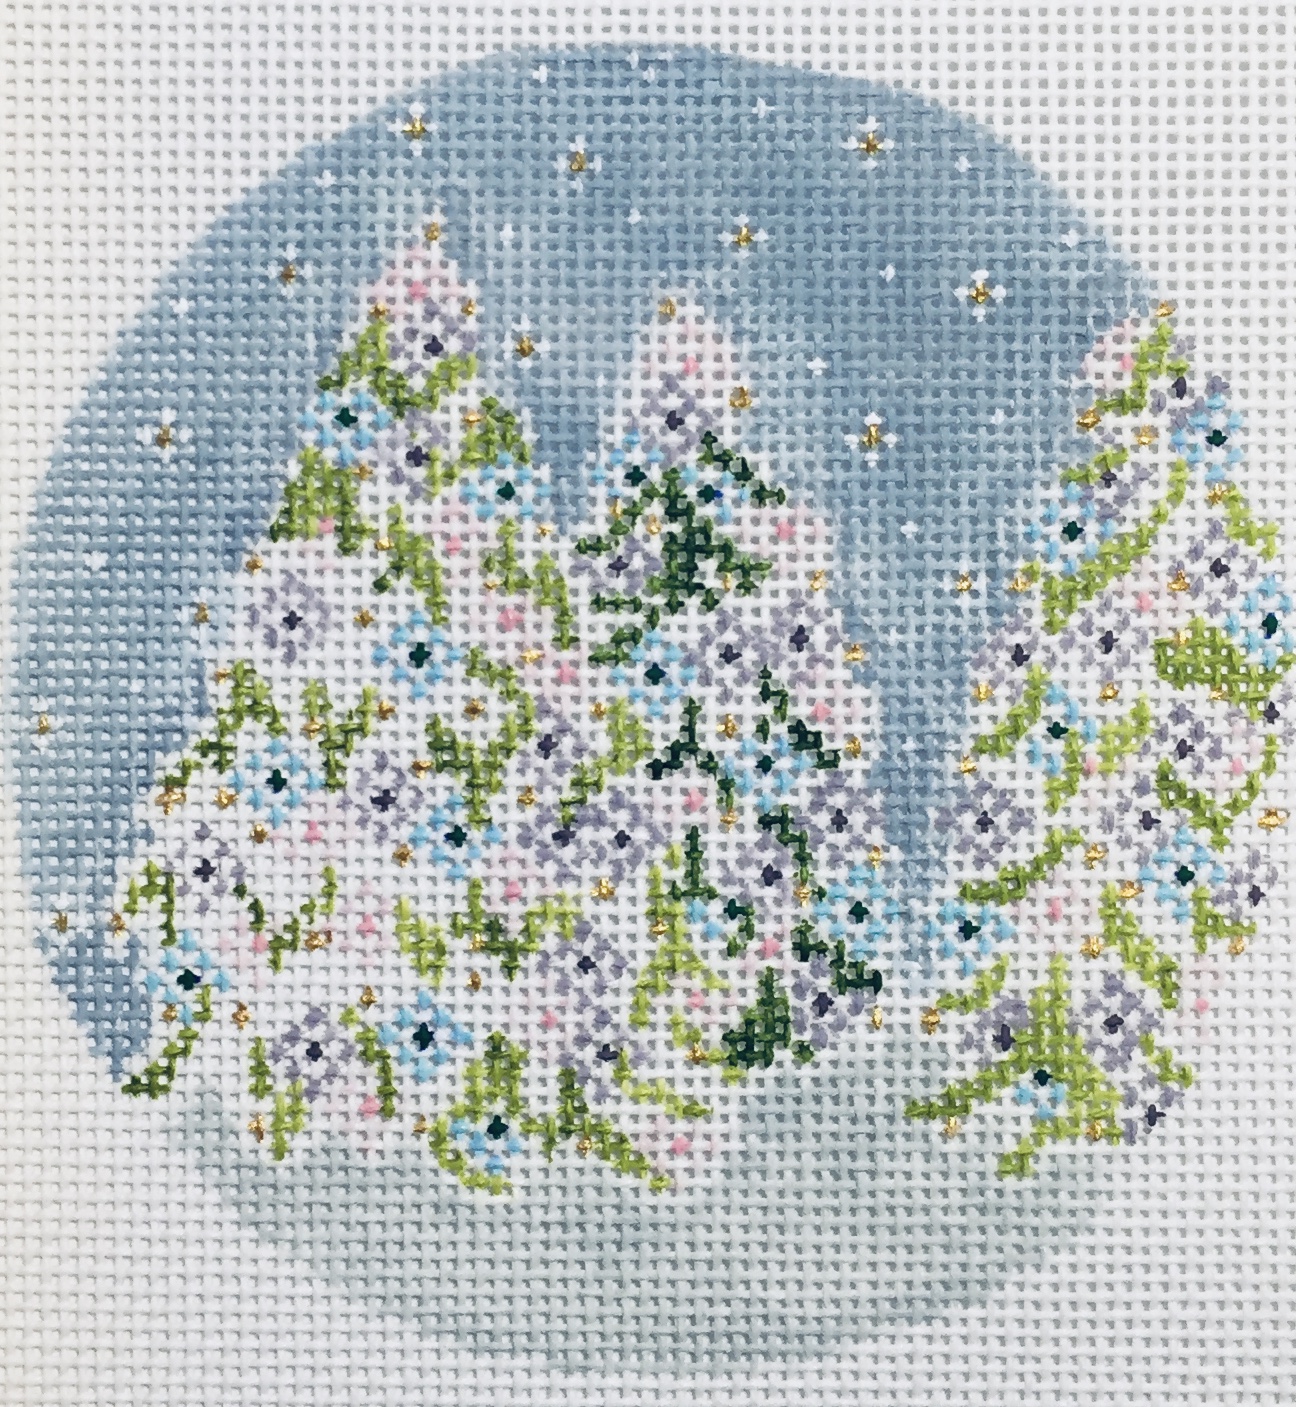 Festive AF needlepoint ornament – Handiwork